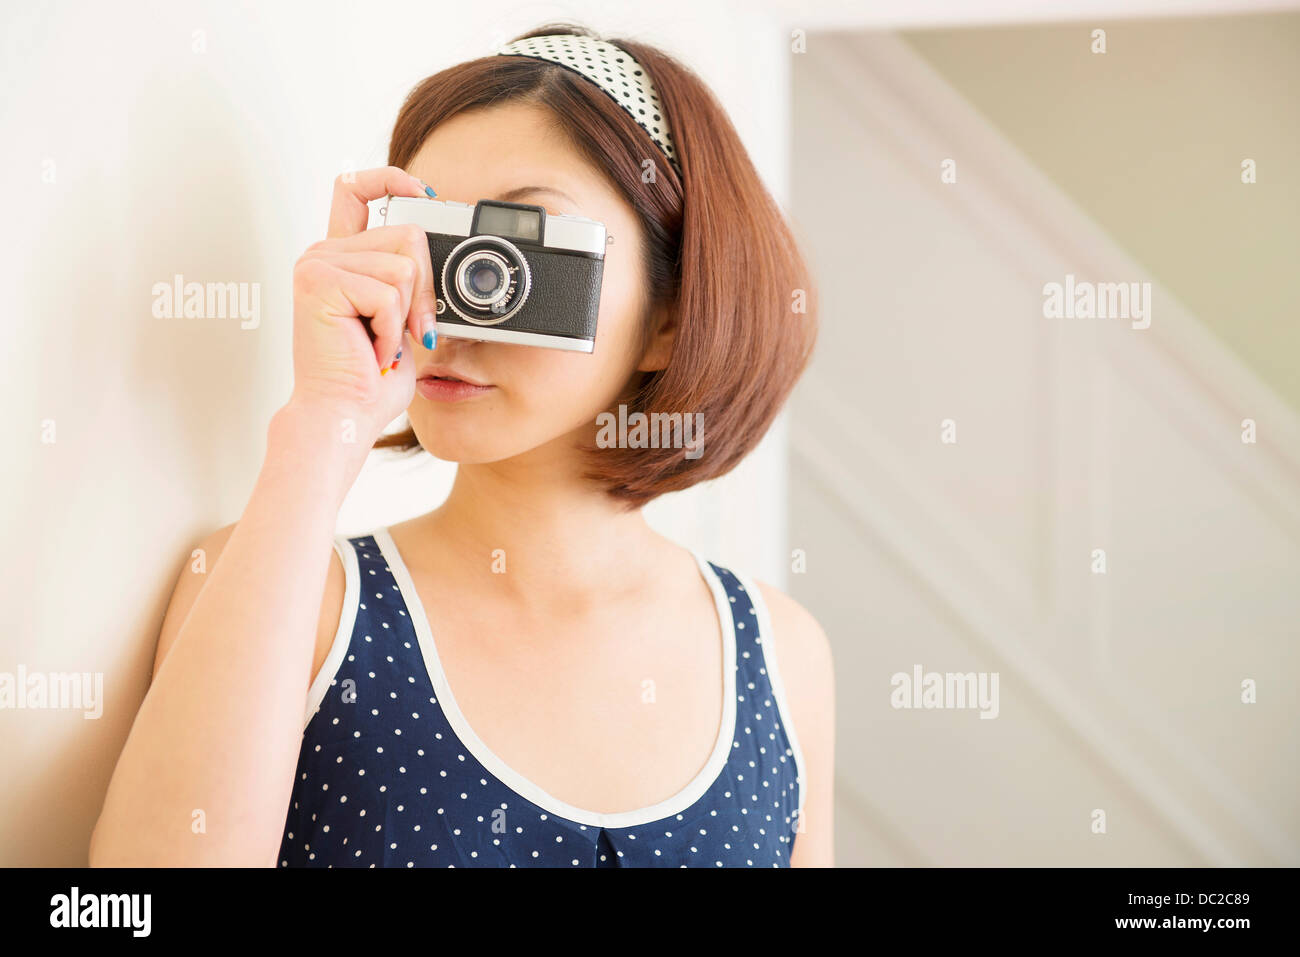 Woman taking photograph Stock Photo